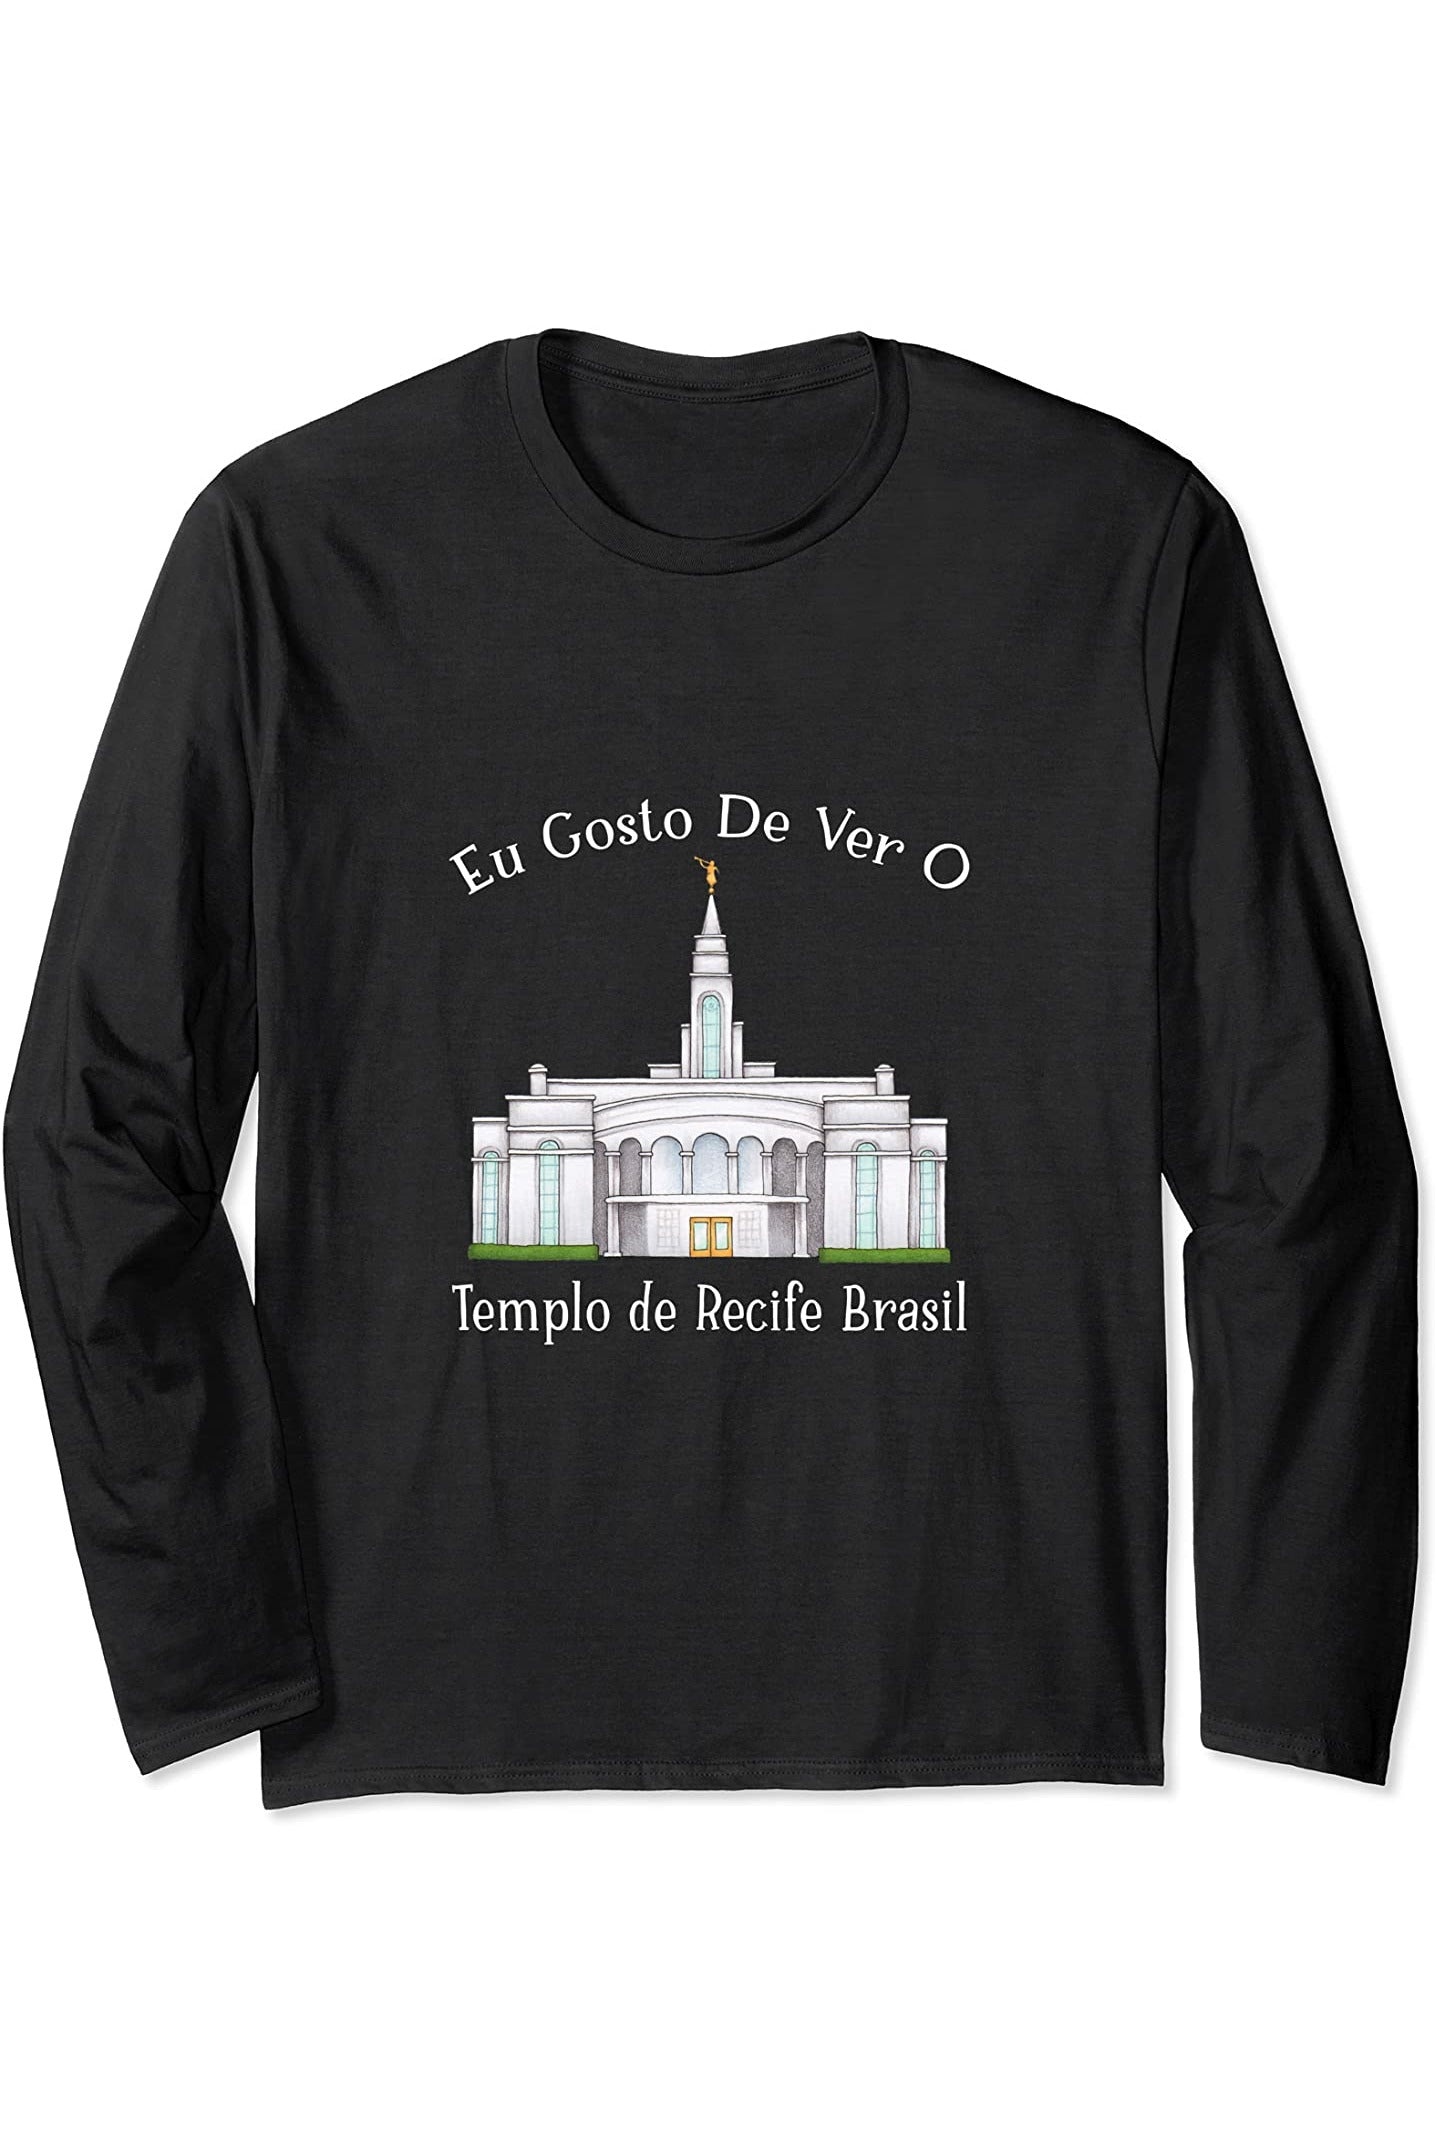 Templo de Manaus Brasil Long Sleeve T-Shirt - Happy Style (Portuguese) US